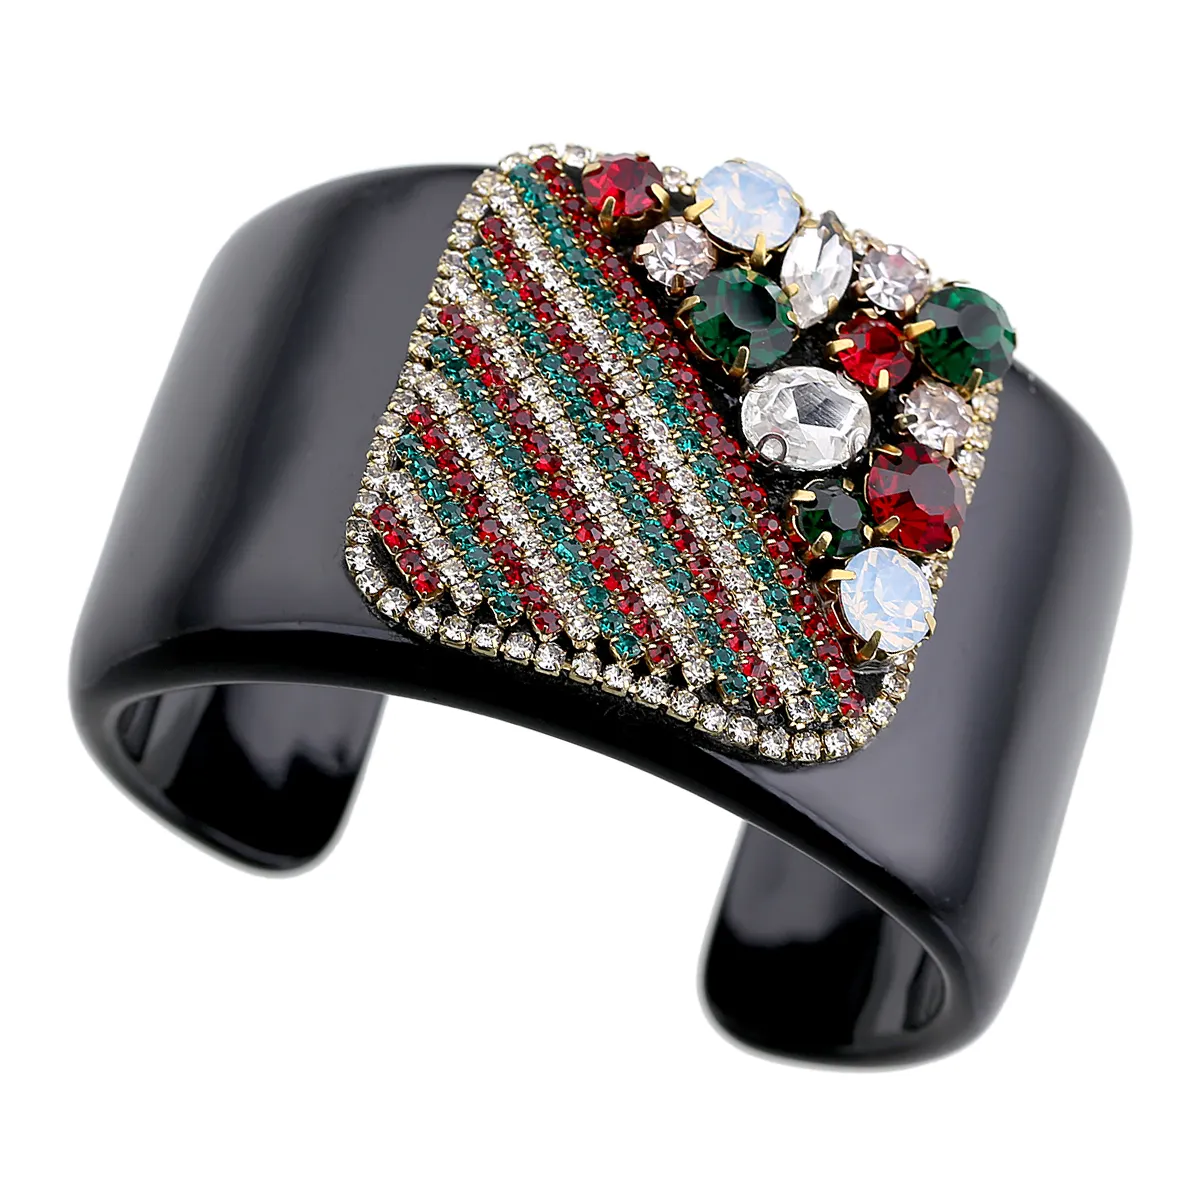 KAYMEN Brand New Luxury Statement Black Resin Open Bangle Square Shape Crystals Bohemia Cuff Bracelet Jewelry